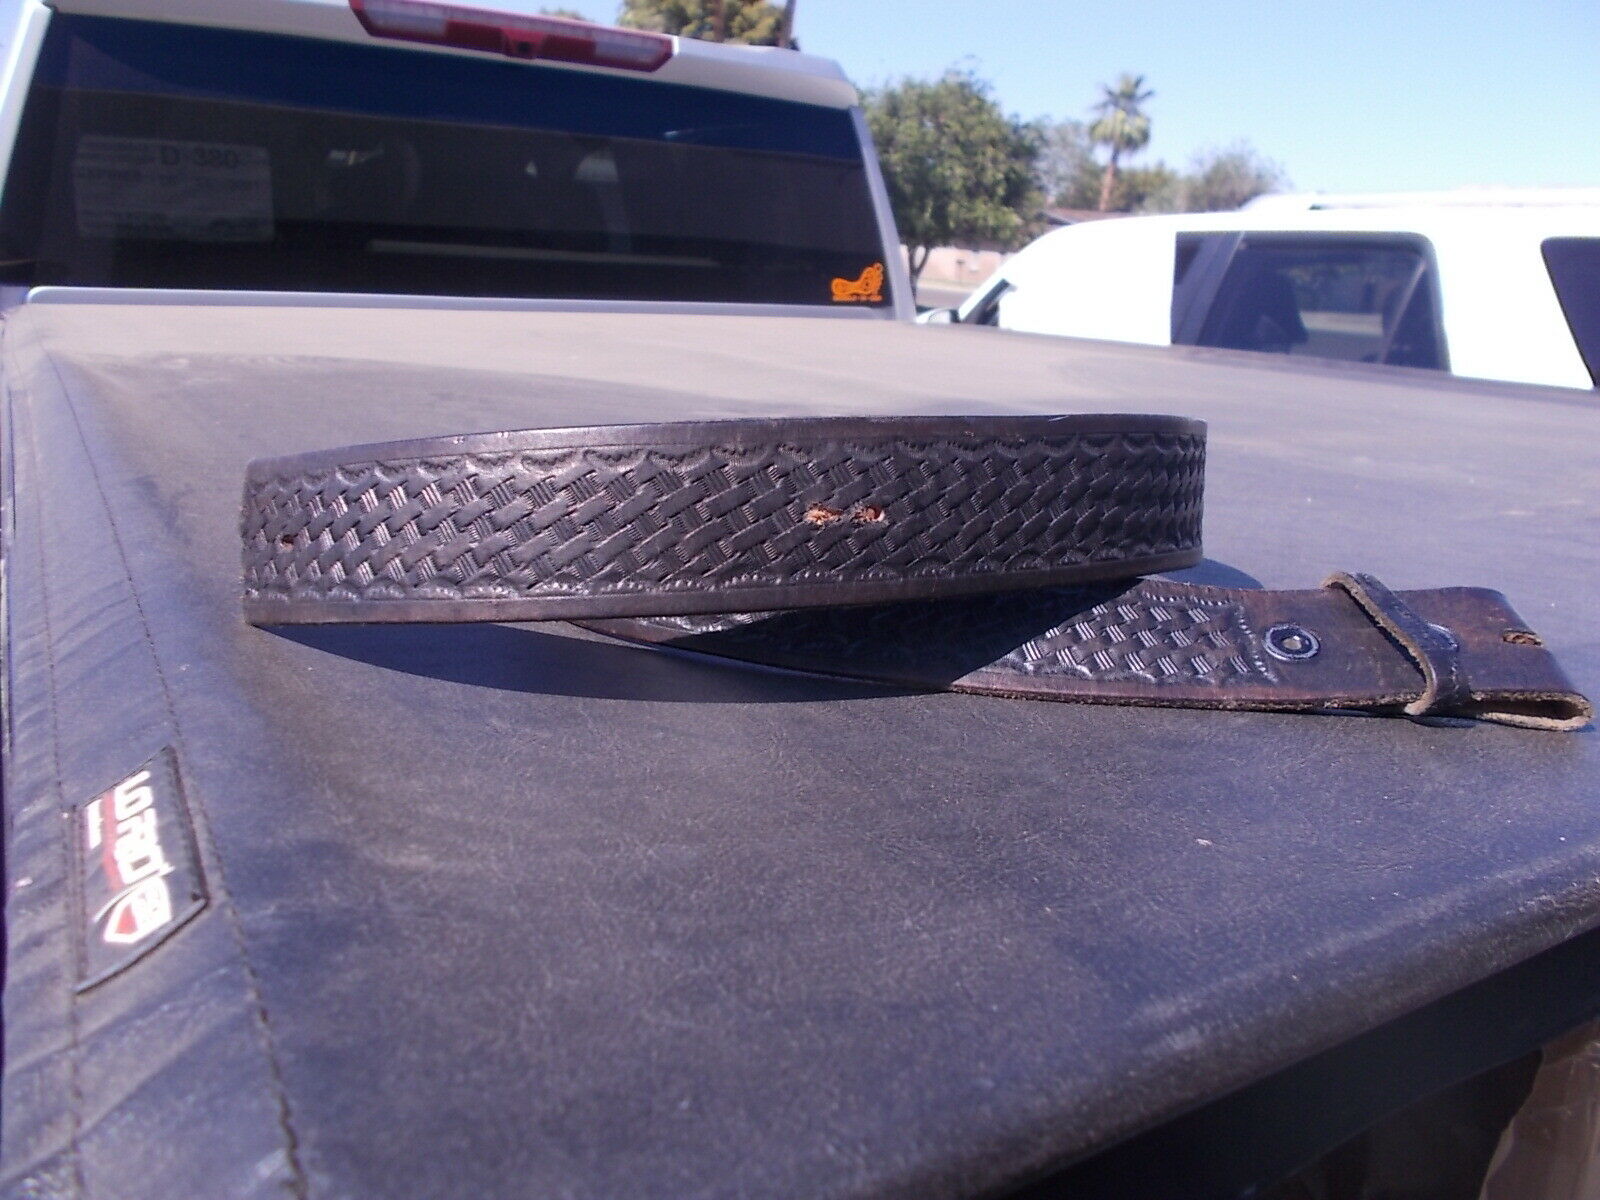 Damaged Cu Toff End Weave Pattern Stamped Leather Work Belt Sz 34.  39" Long